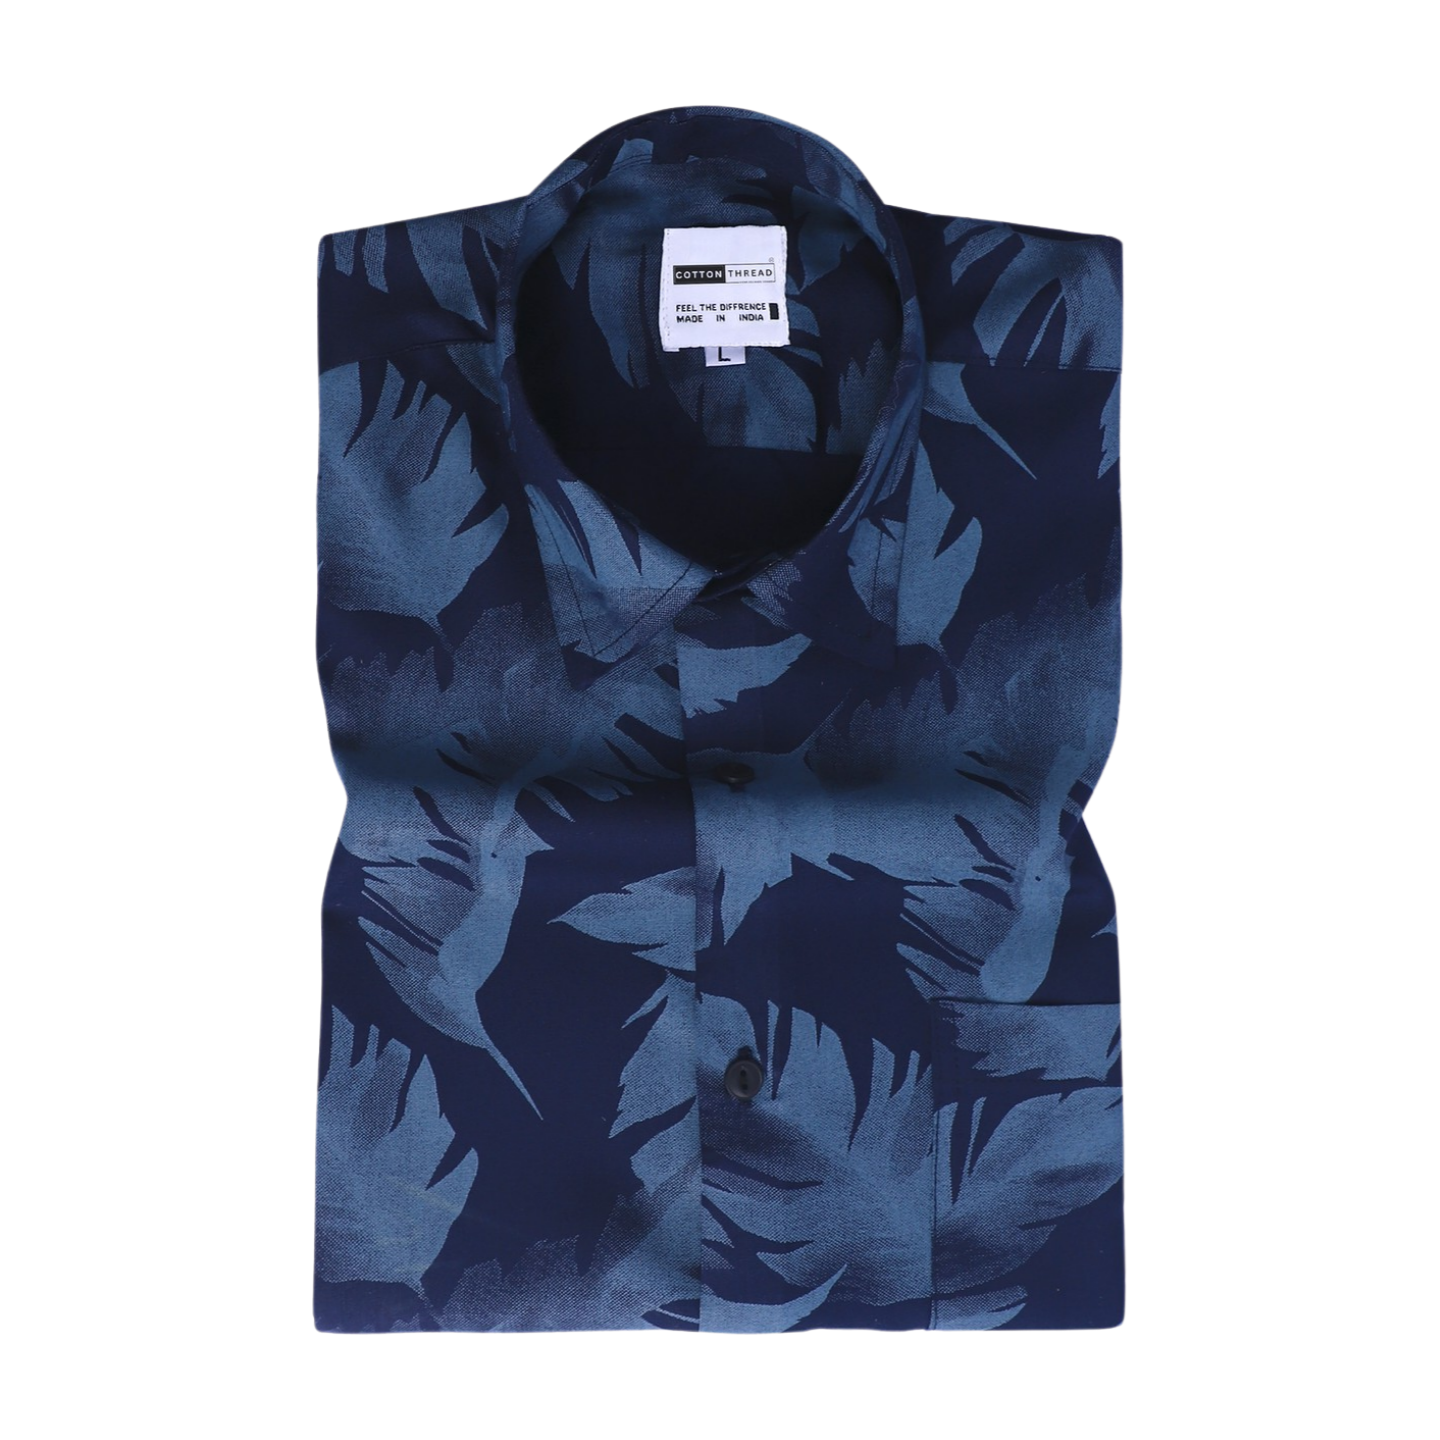 Men's Premium Cotton Full Sleeve Blue & Black Leaf Printed Shirt By Cotton Thread (PRT-057)